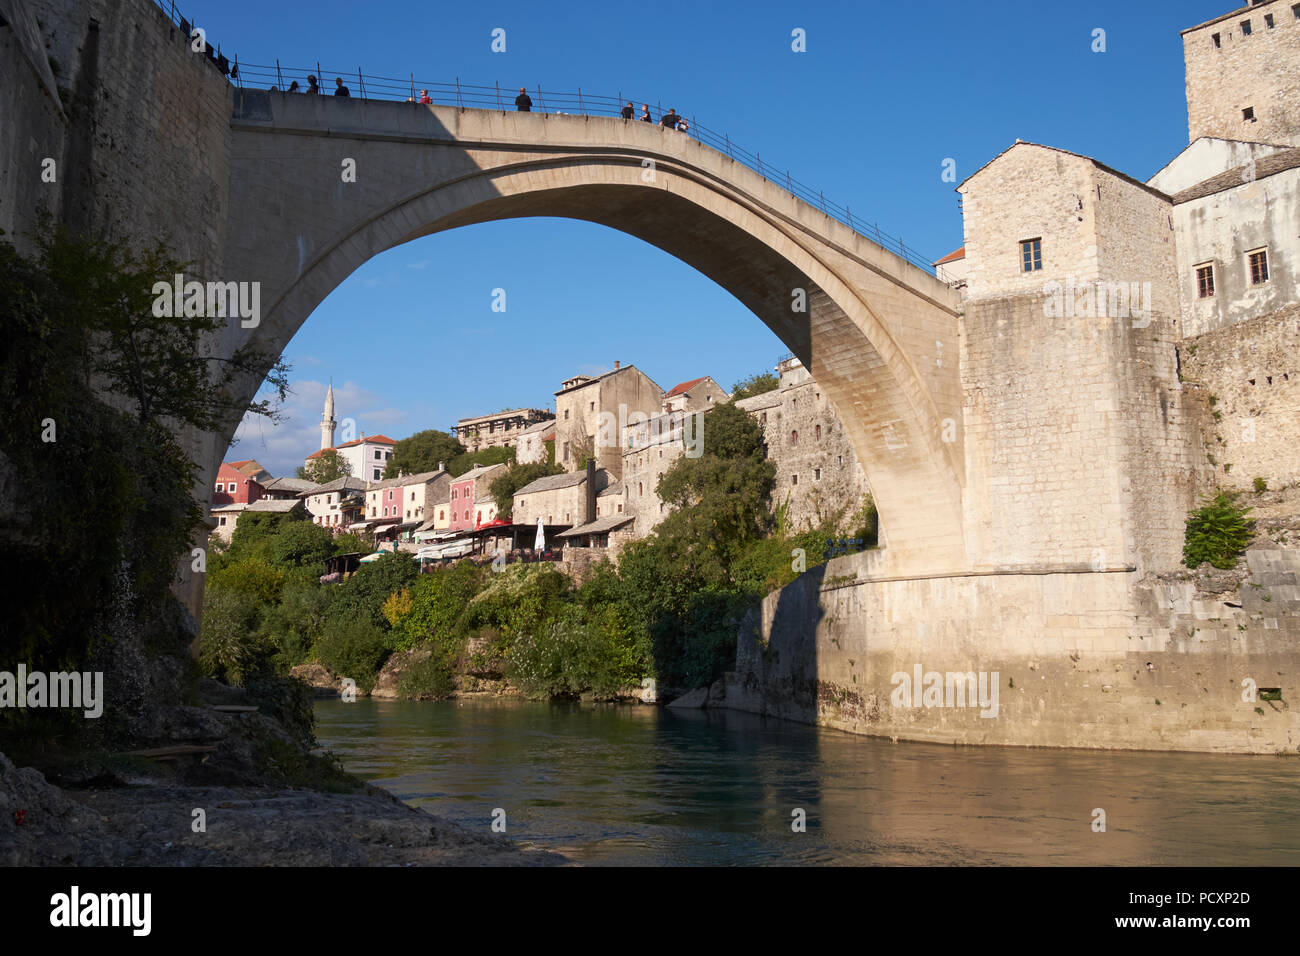 The Stari Most (Old Bridge) spanning the Neretva River at Mostar, Bosnia and Herzegovina. Stock Photo